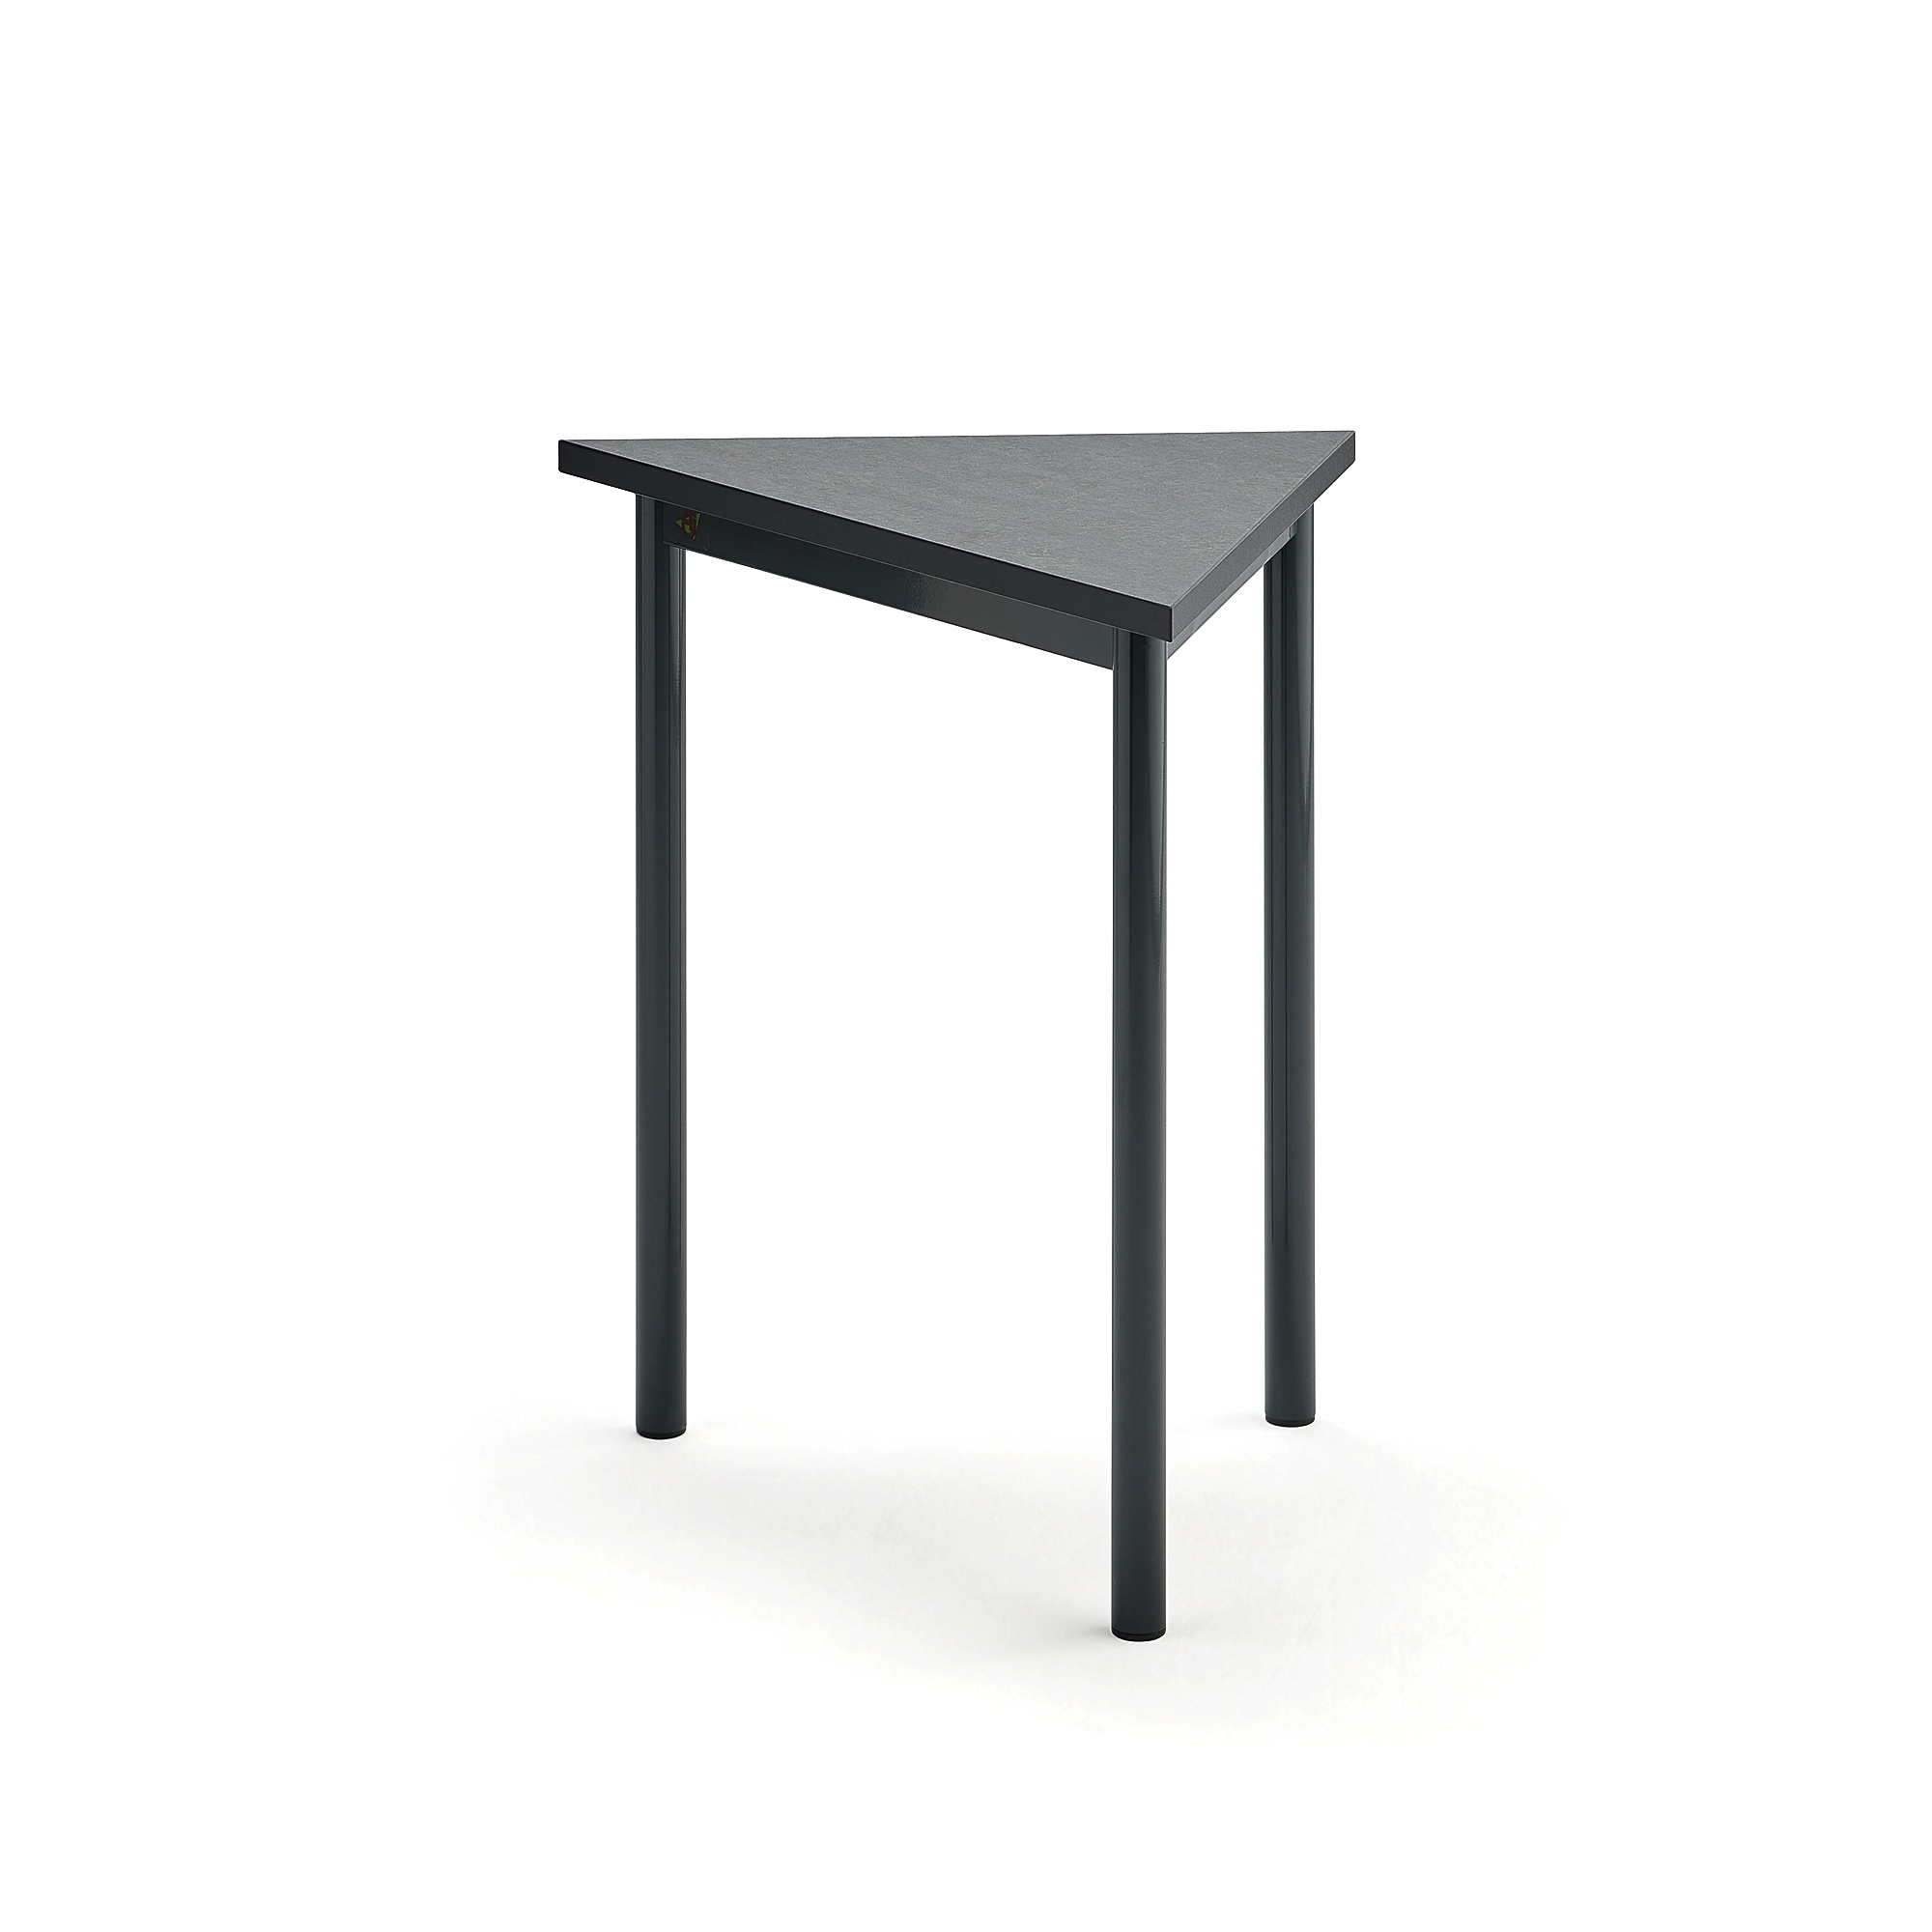 Stůl SONITUS TRIANGEL, 700x600x720 mm, antracitově šedé nohy, deska s linoleem, tmavě šedá